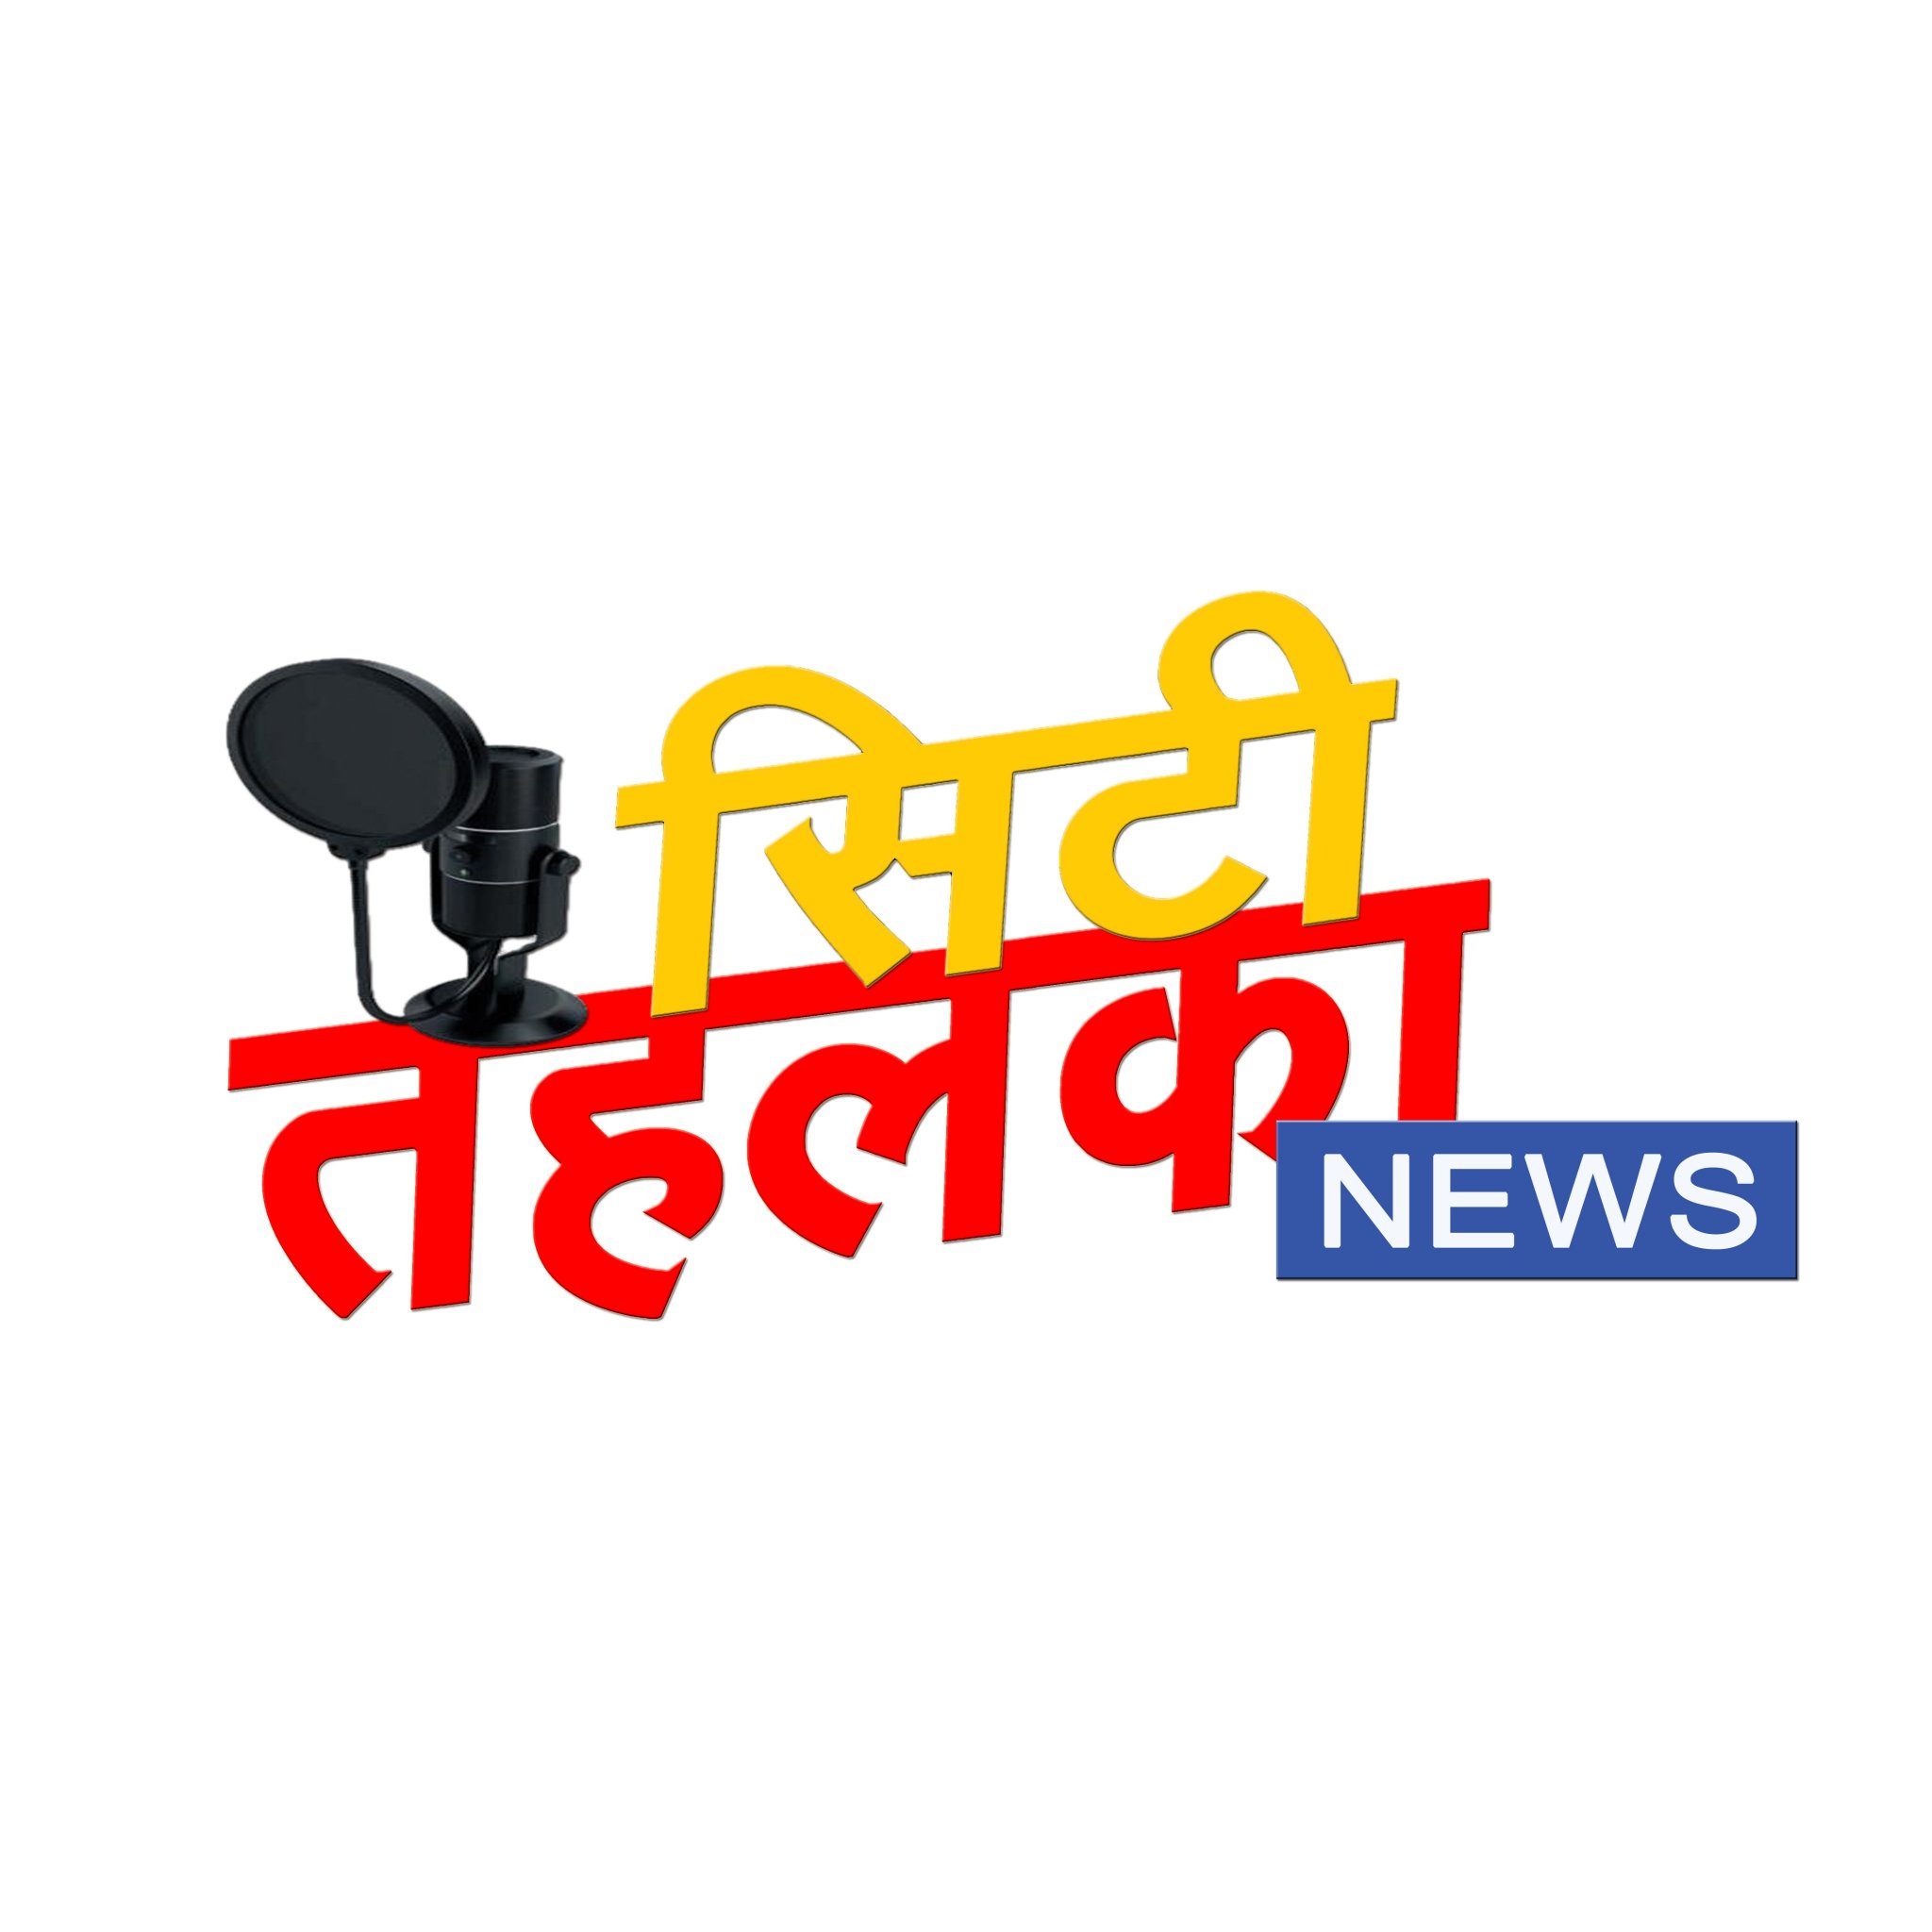 City Tehelka covers news from all districts of Haryana. City Tehelka is a Haryana based hyperlocal digital news platform by JMDK Media Private Limited.